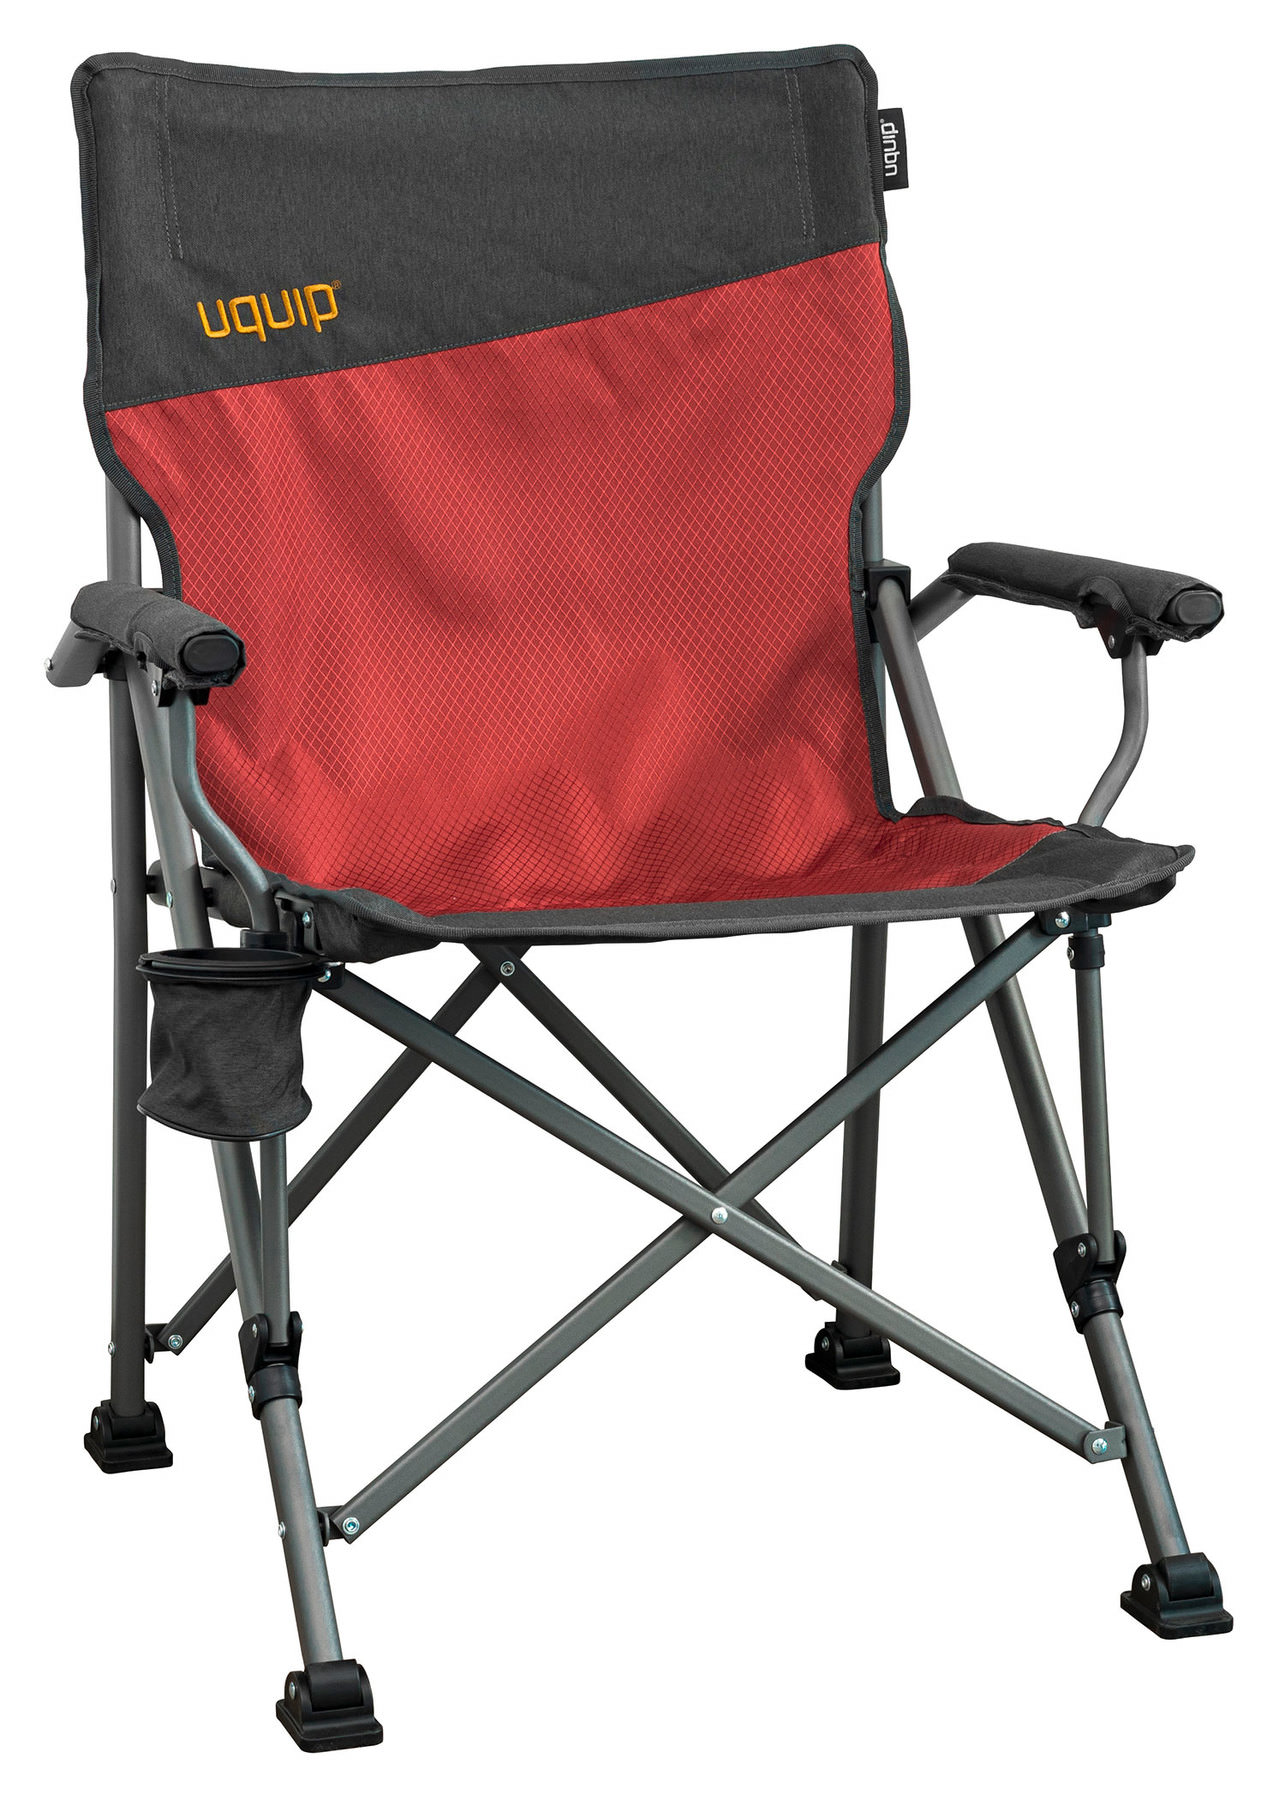 Uquip Roxy Folding Chair